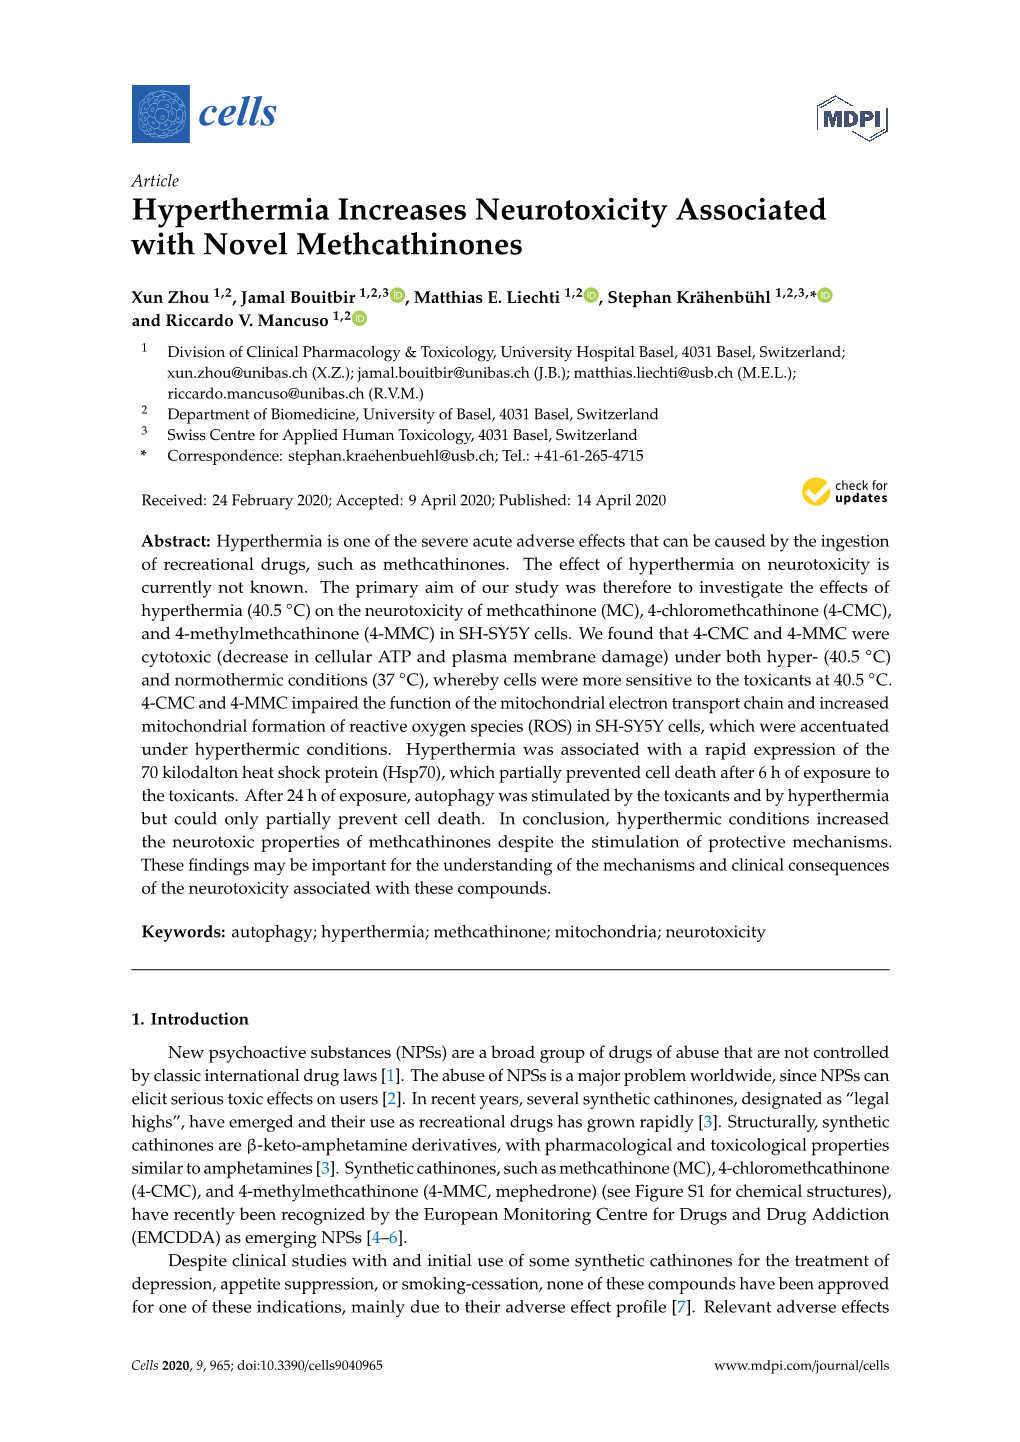 Hyperthermia Increases Neurotoxicity Associated with Novel Methcathinones